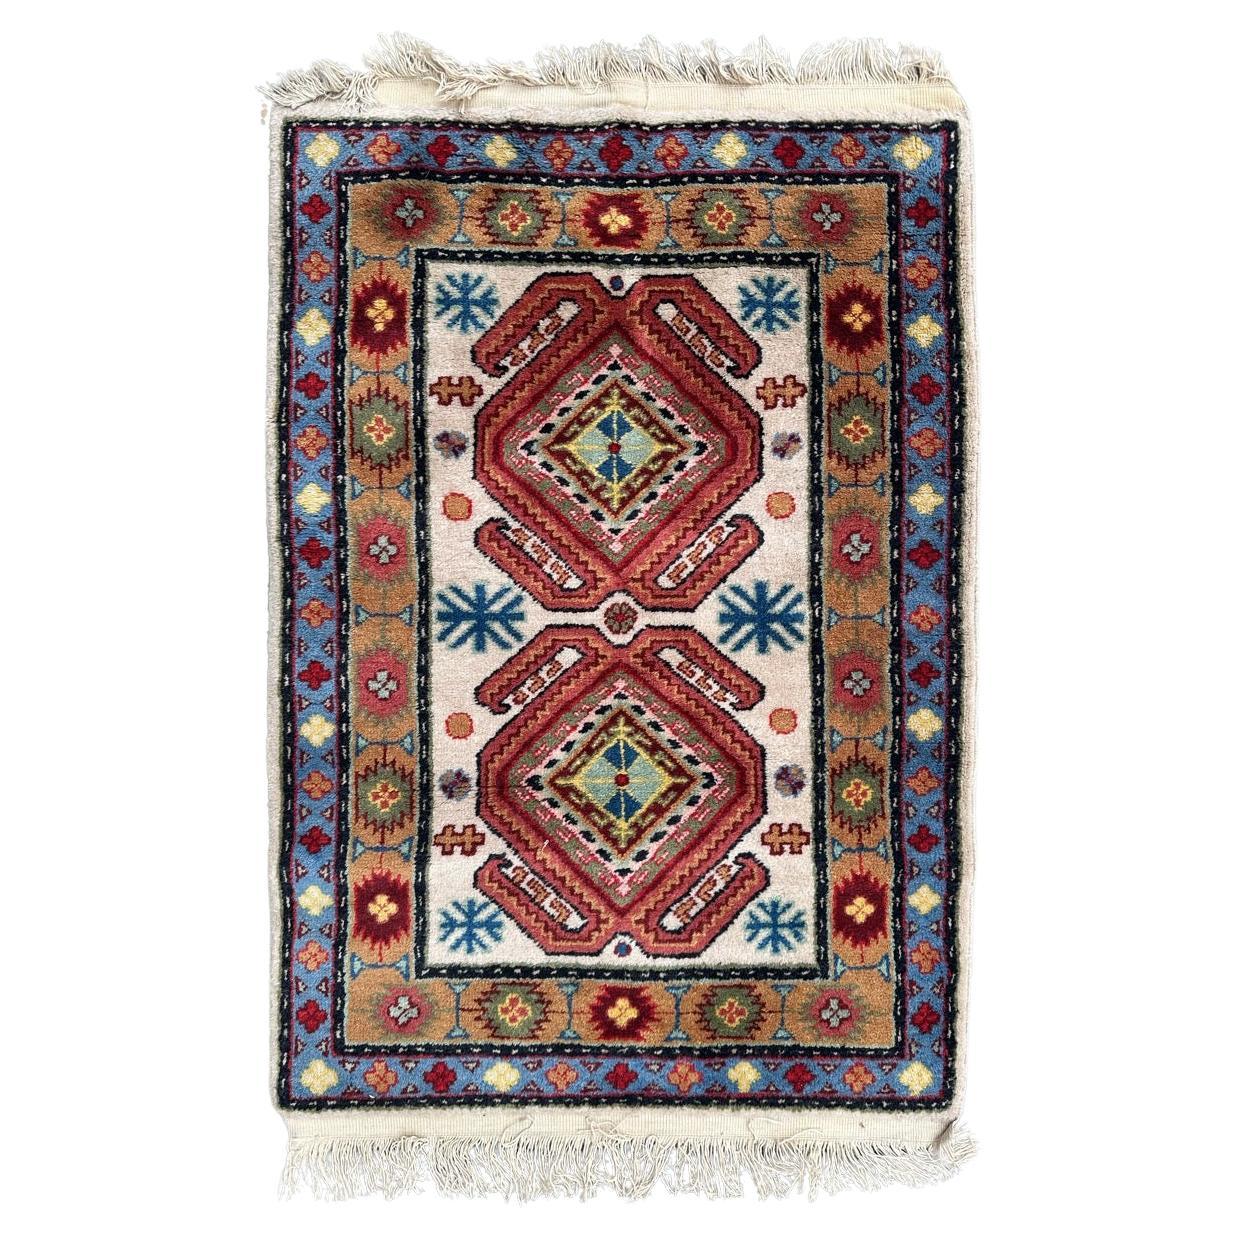 Bobyrug’s pretty vintage little Caucasian design Sinkiang rug